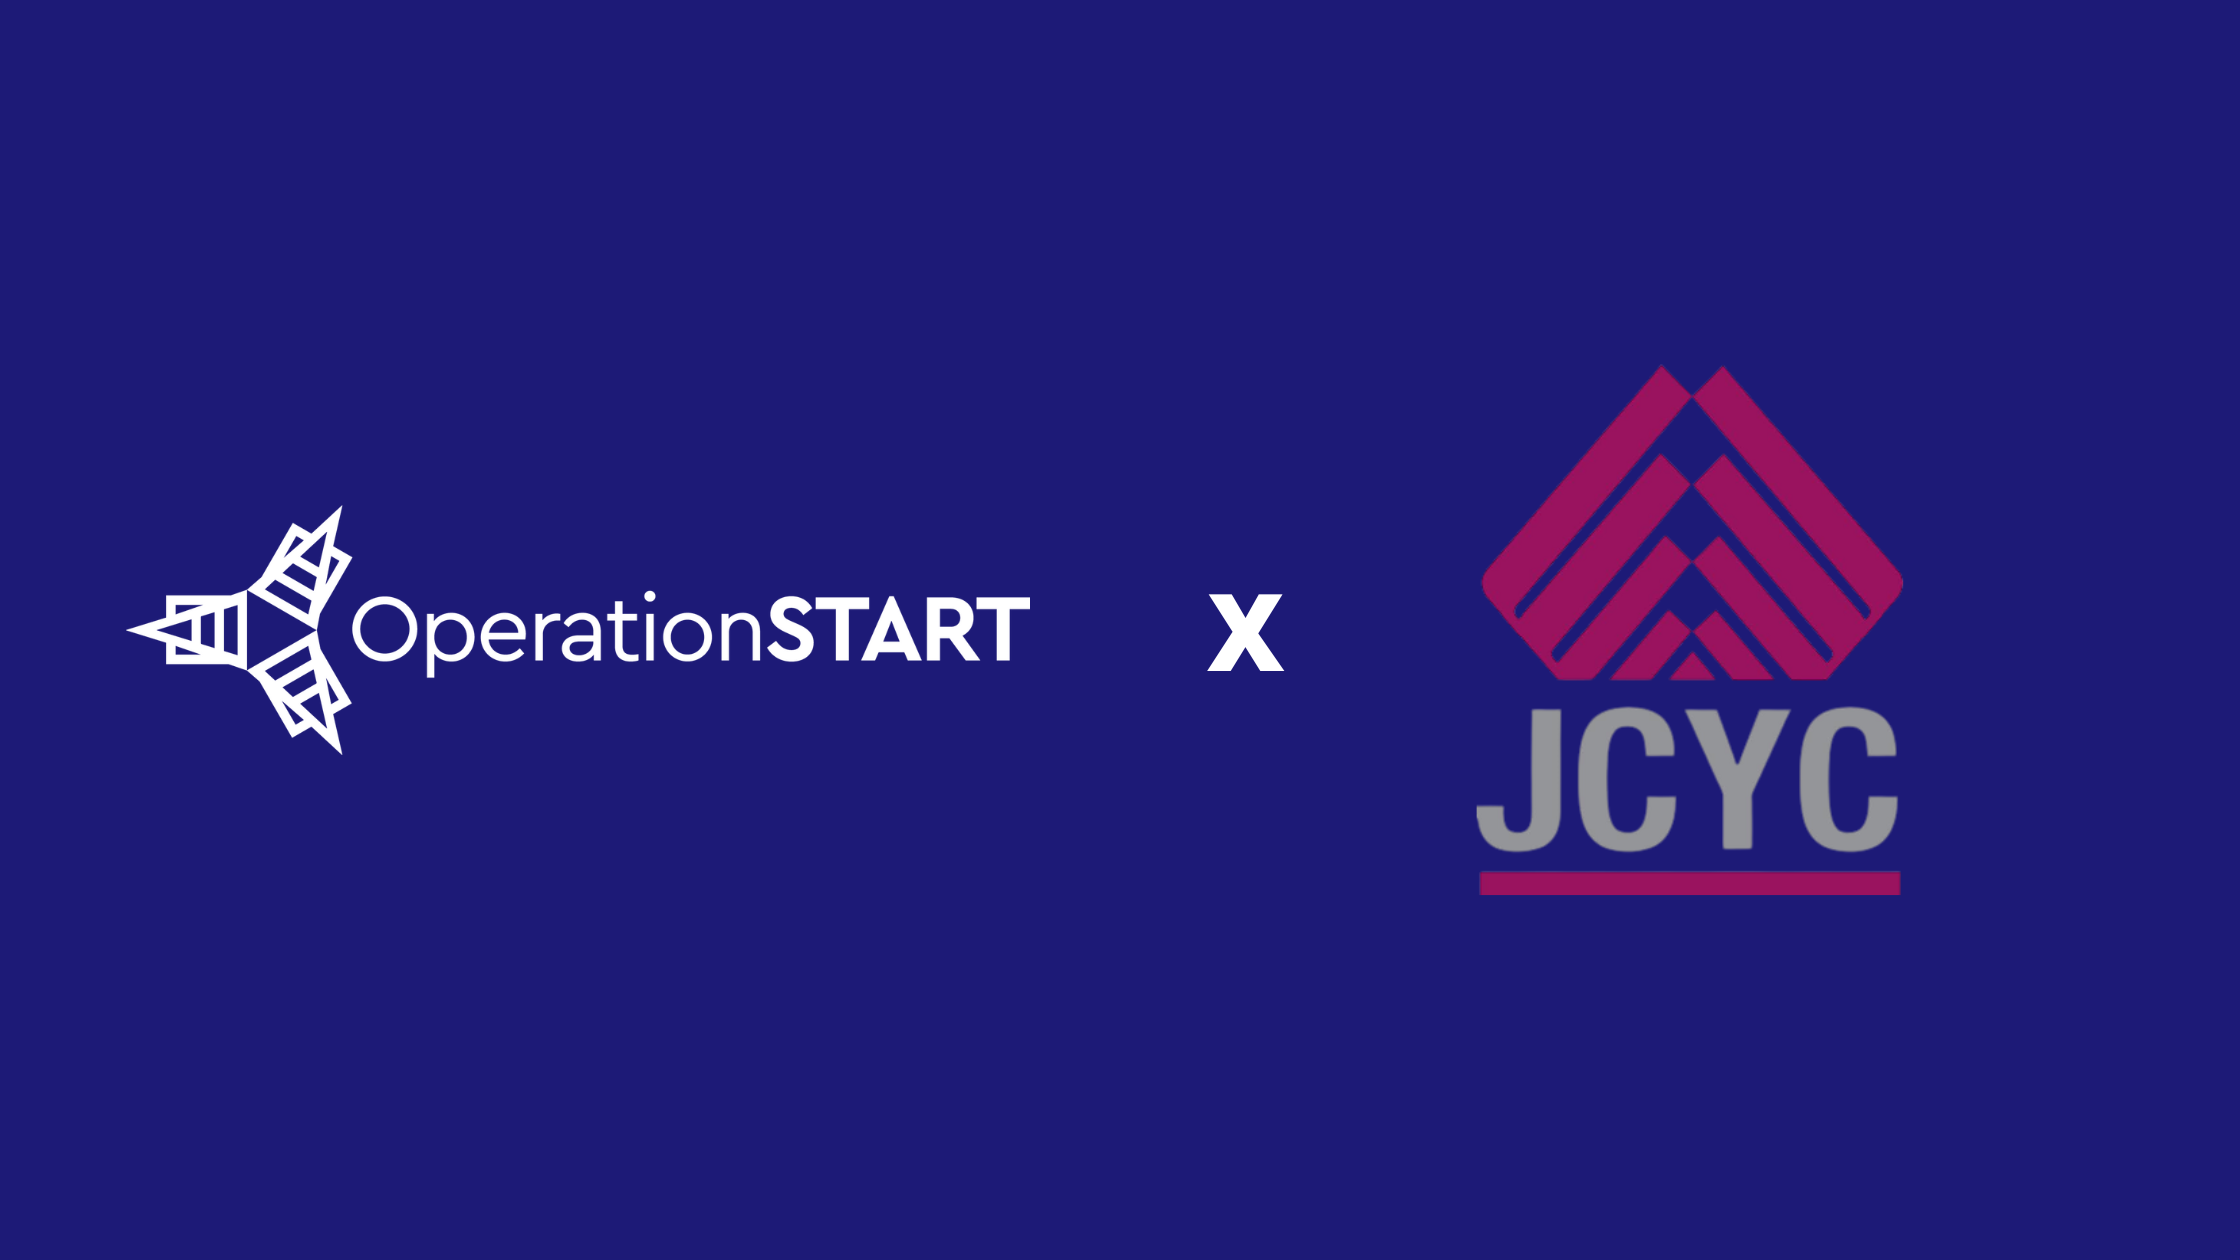 OperationSTART and JCYC partnership